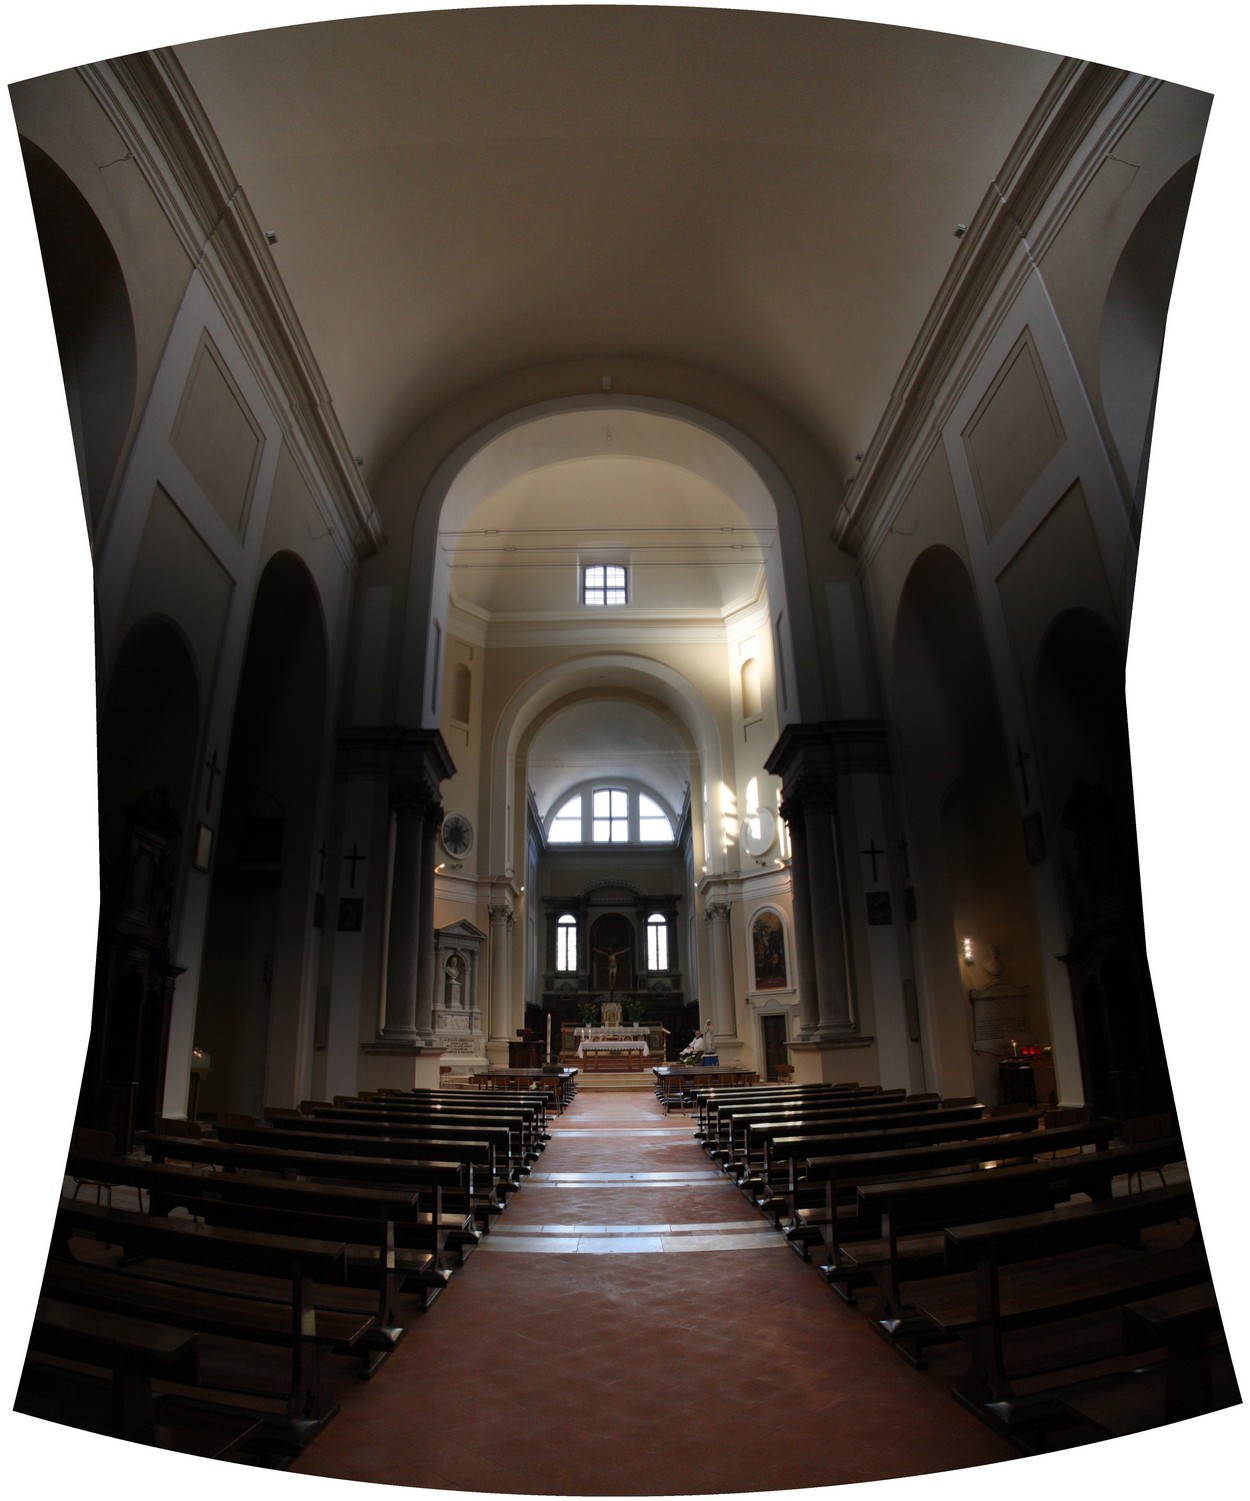 Pesaro - Chiesa di San Giovanni 